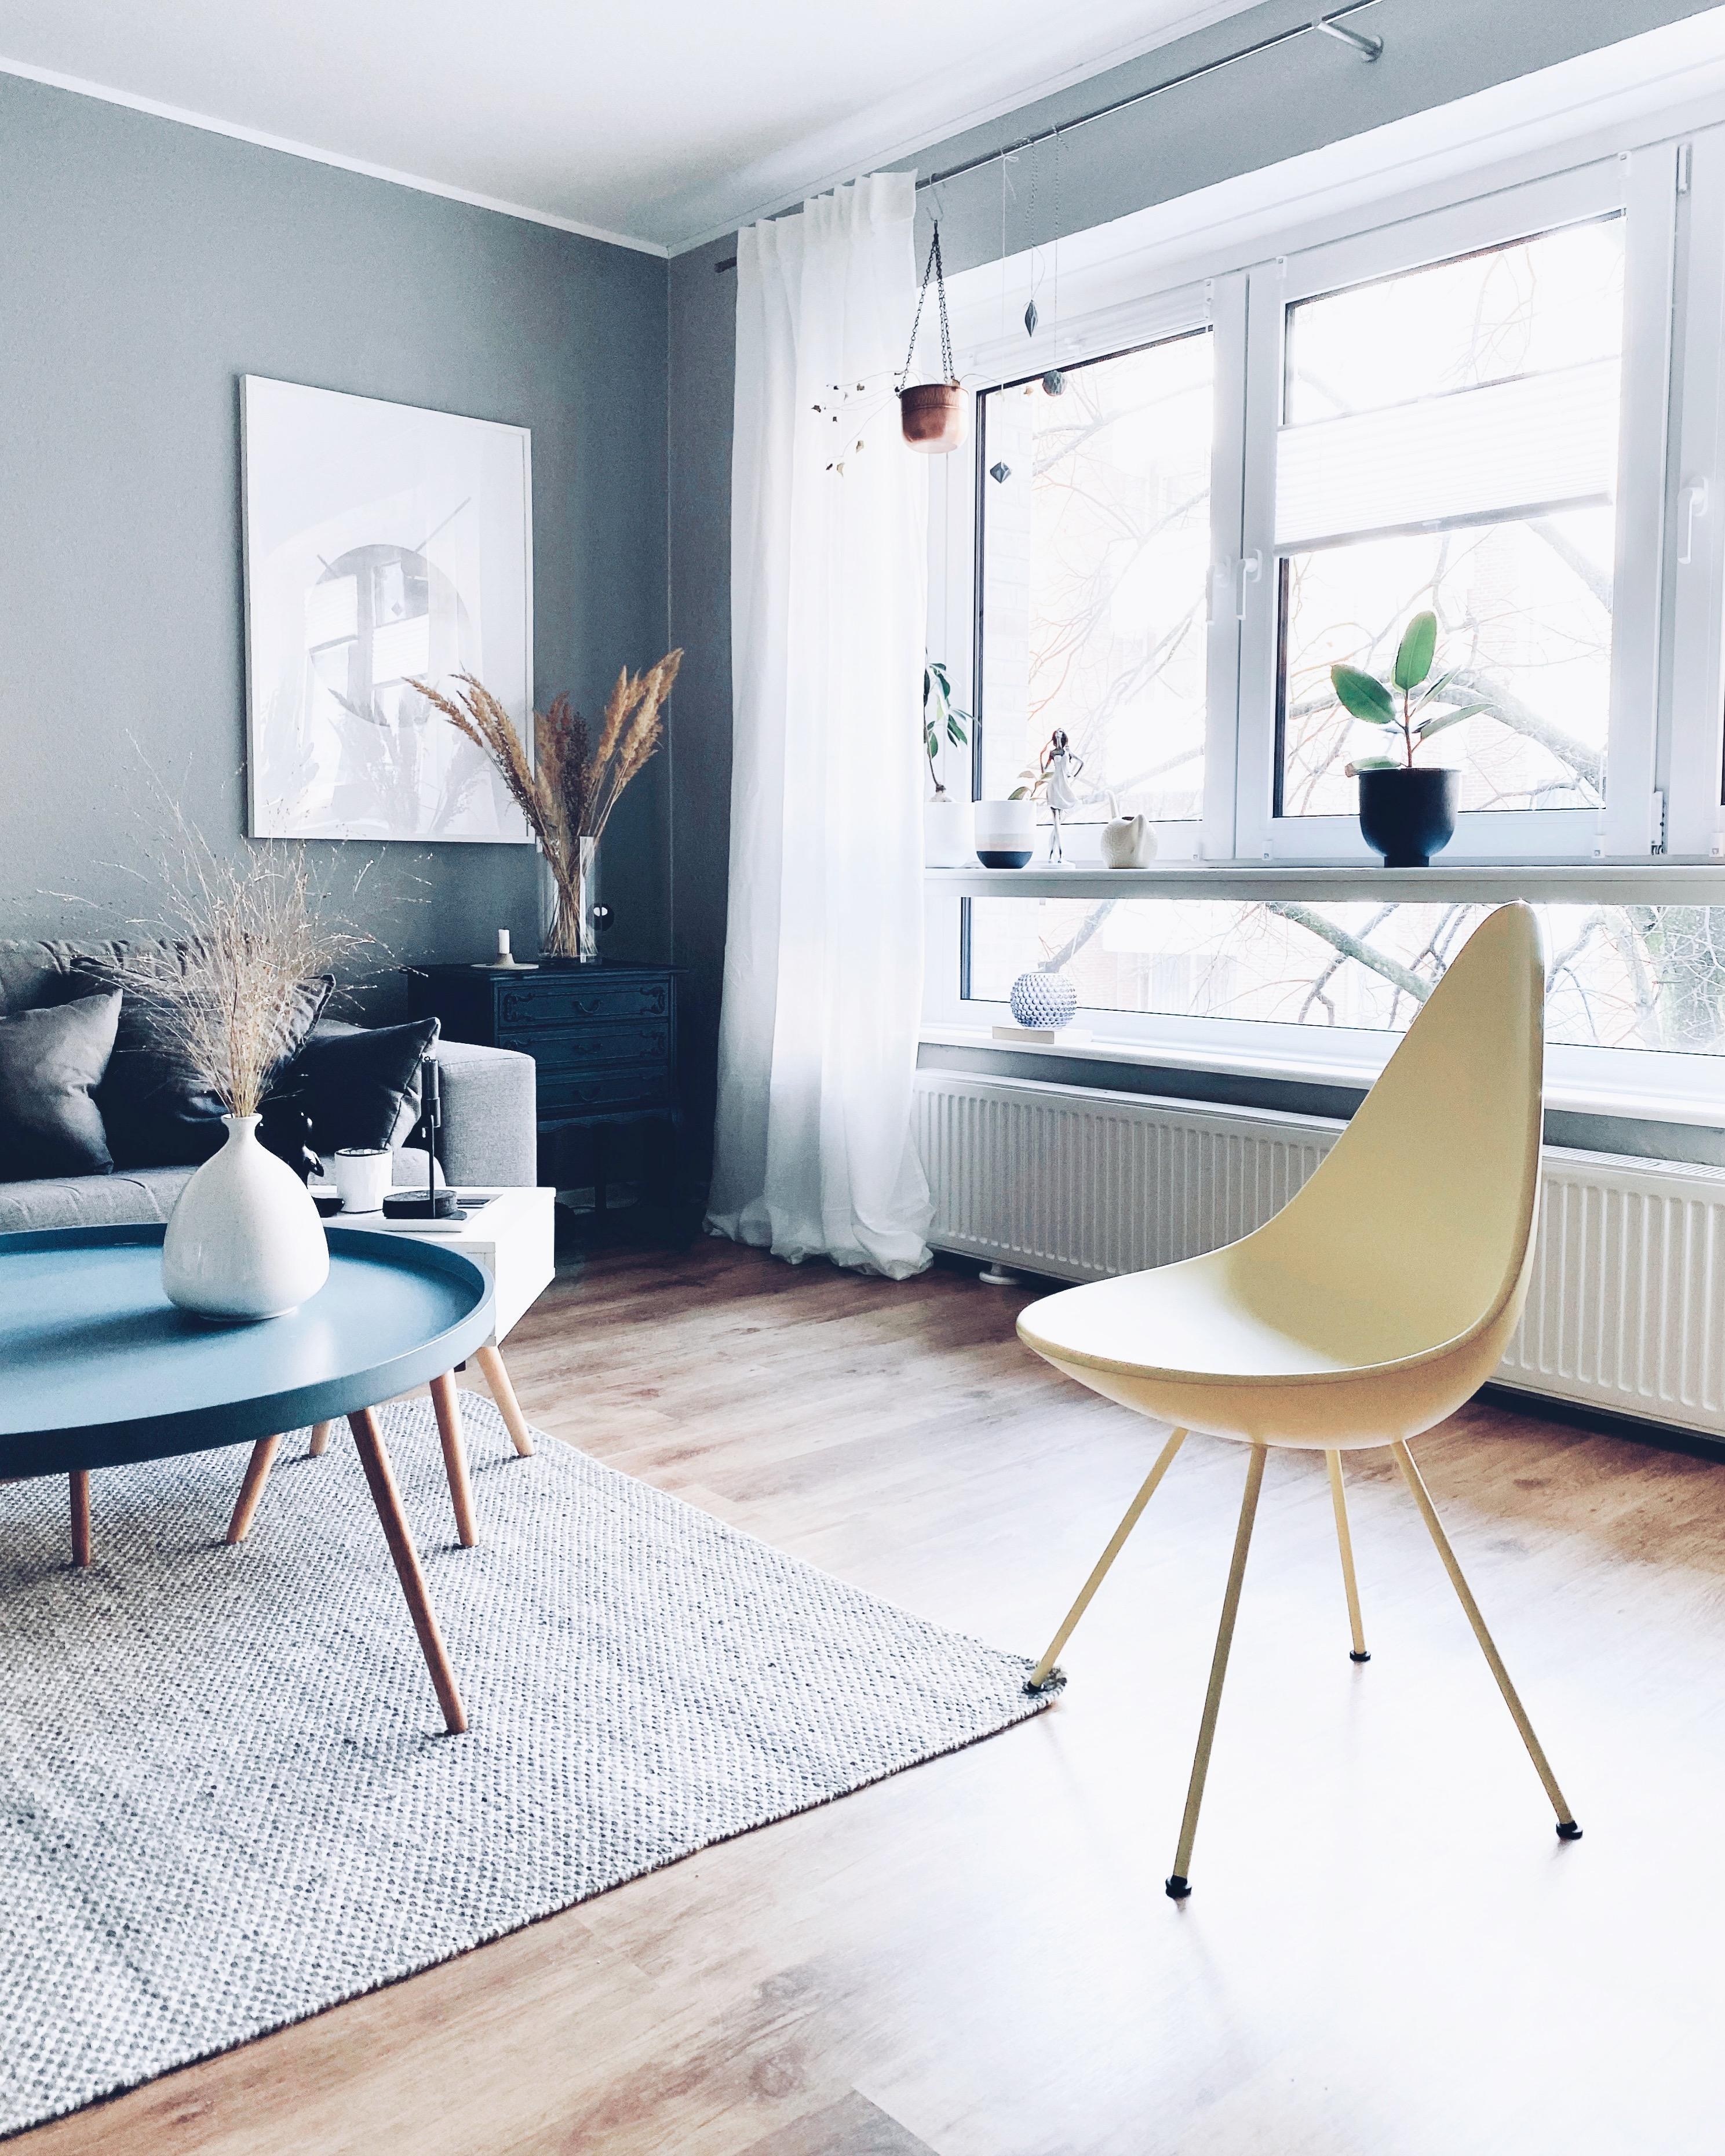 #interior #nordicroom #monochrome #minimalism #scandinavianliving #plantlover #mynordicroom #hygge